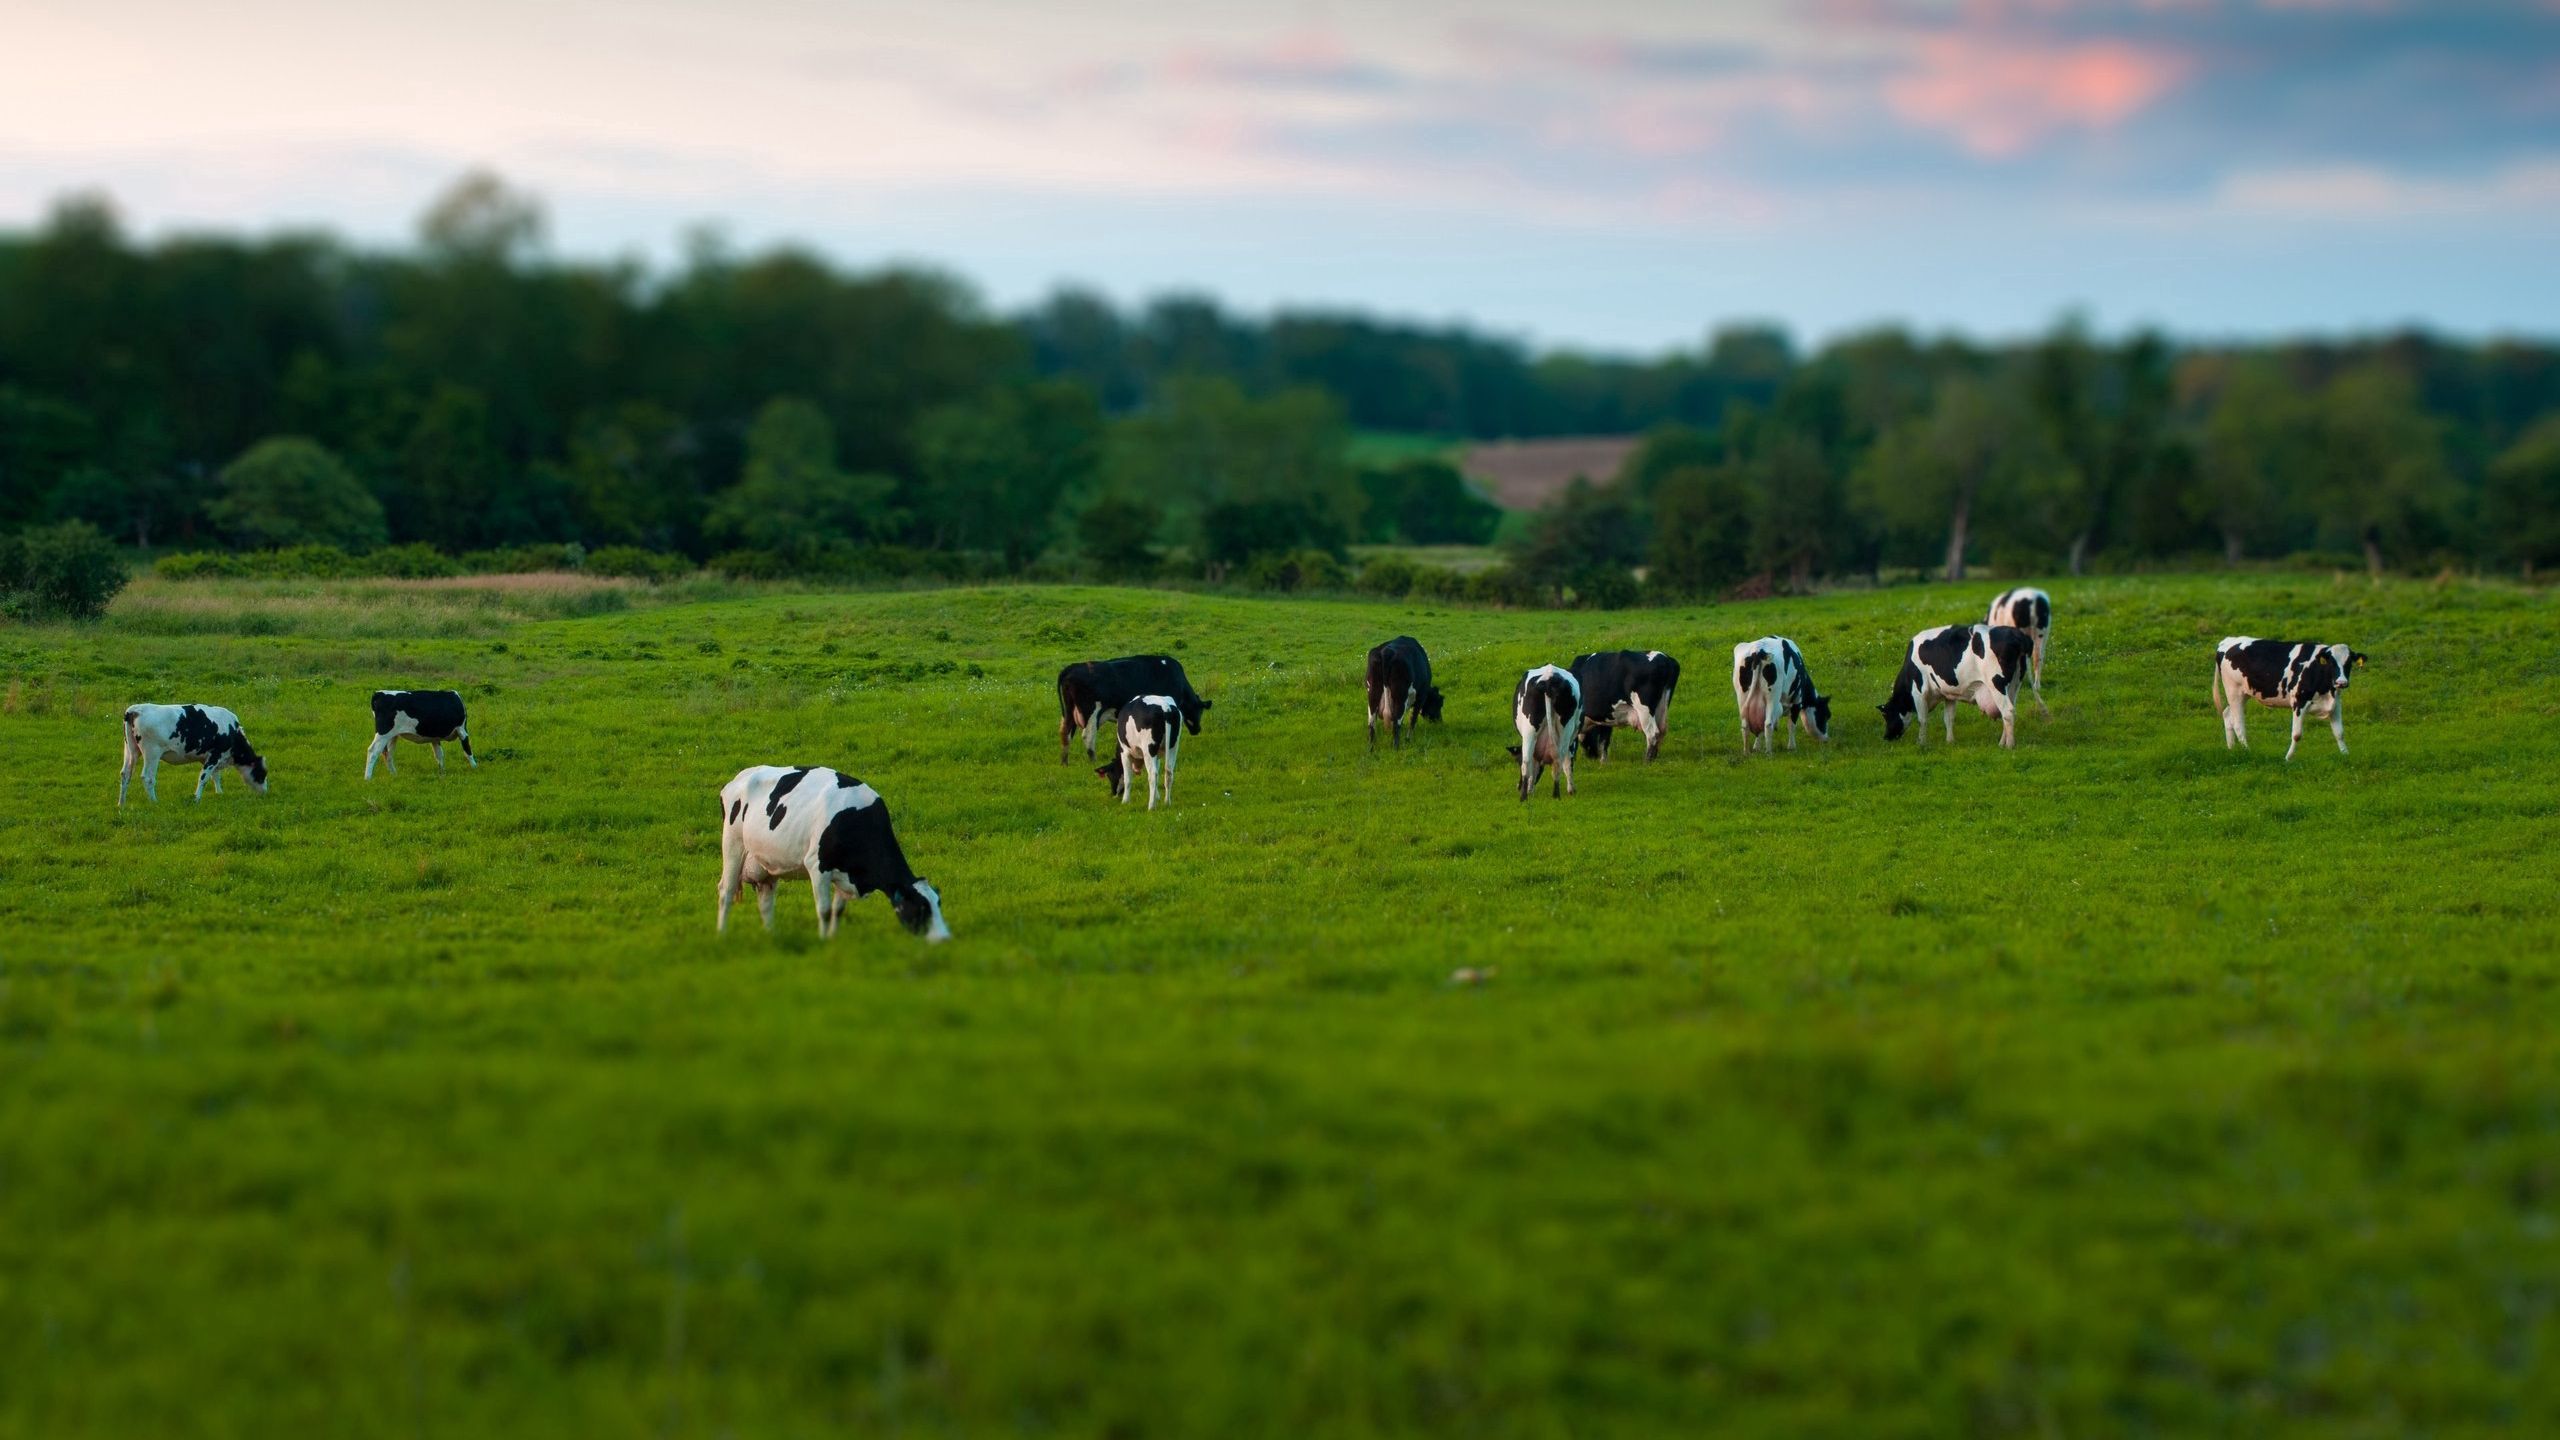 Download wallpaper 2560x1440 cows, field, grass, eating, walking